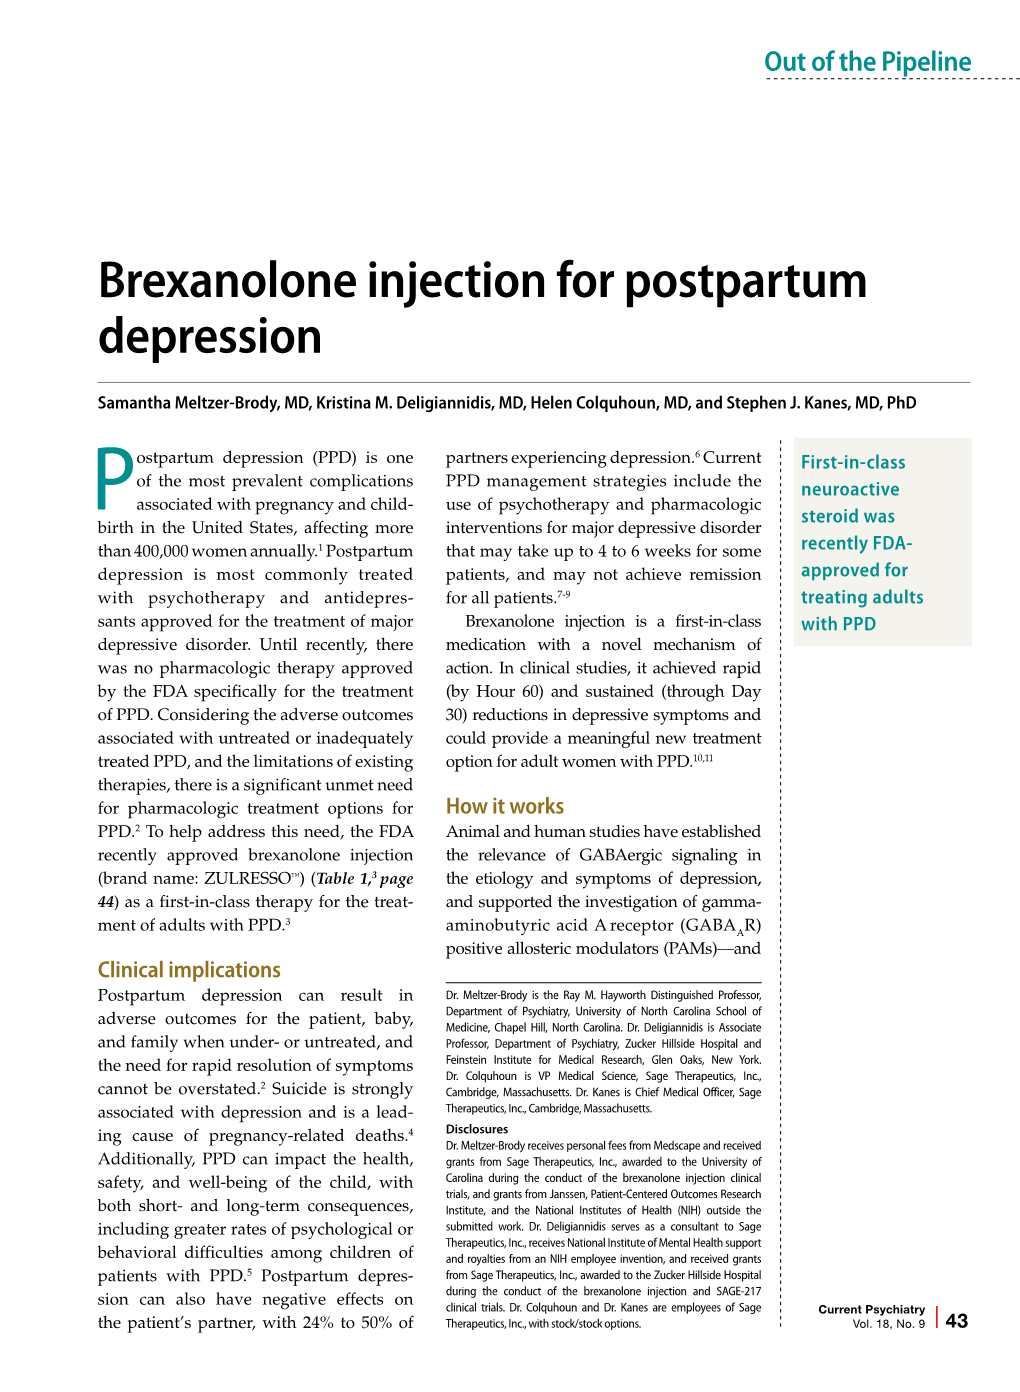 Brexanolone Injection for Postpartum Depression